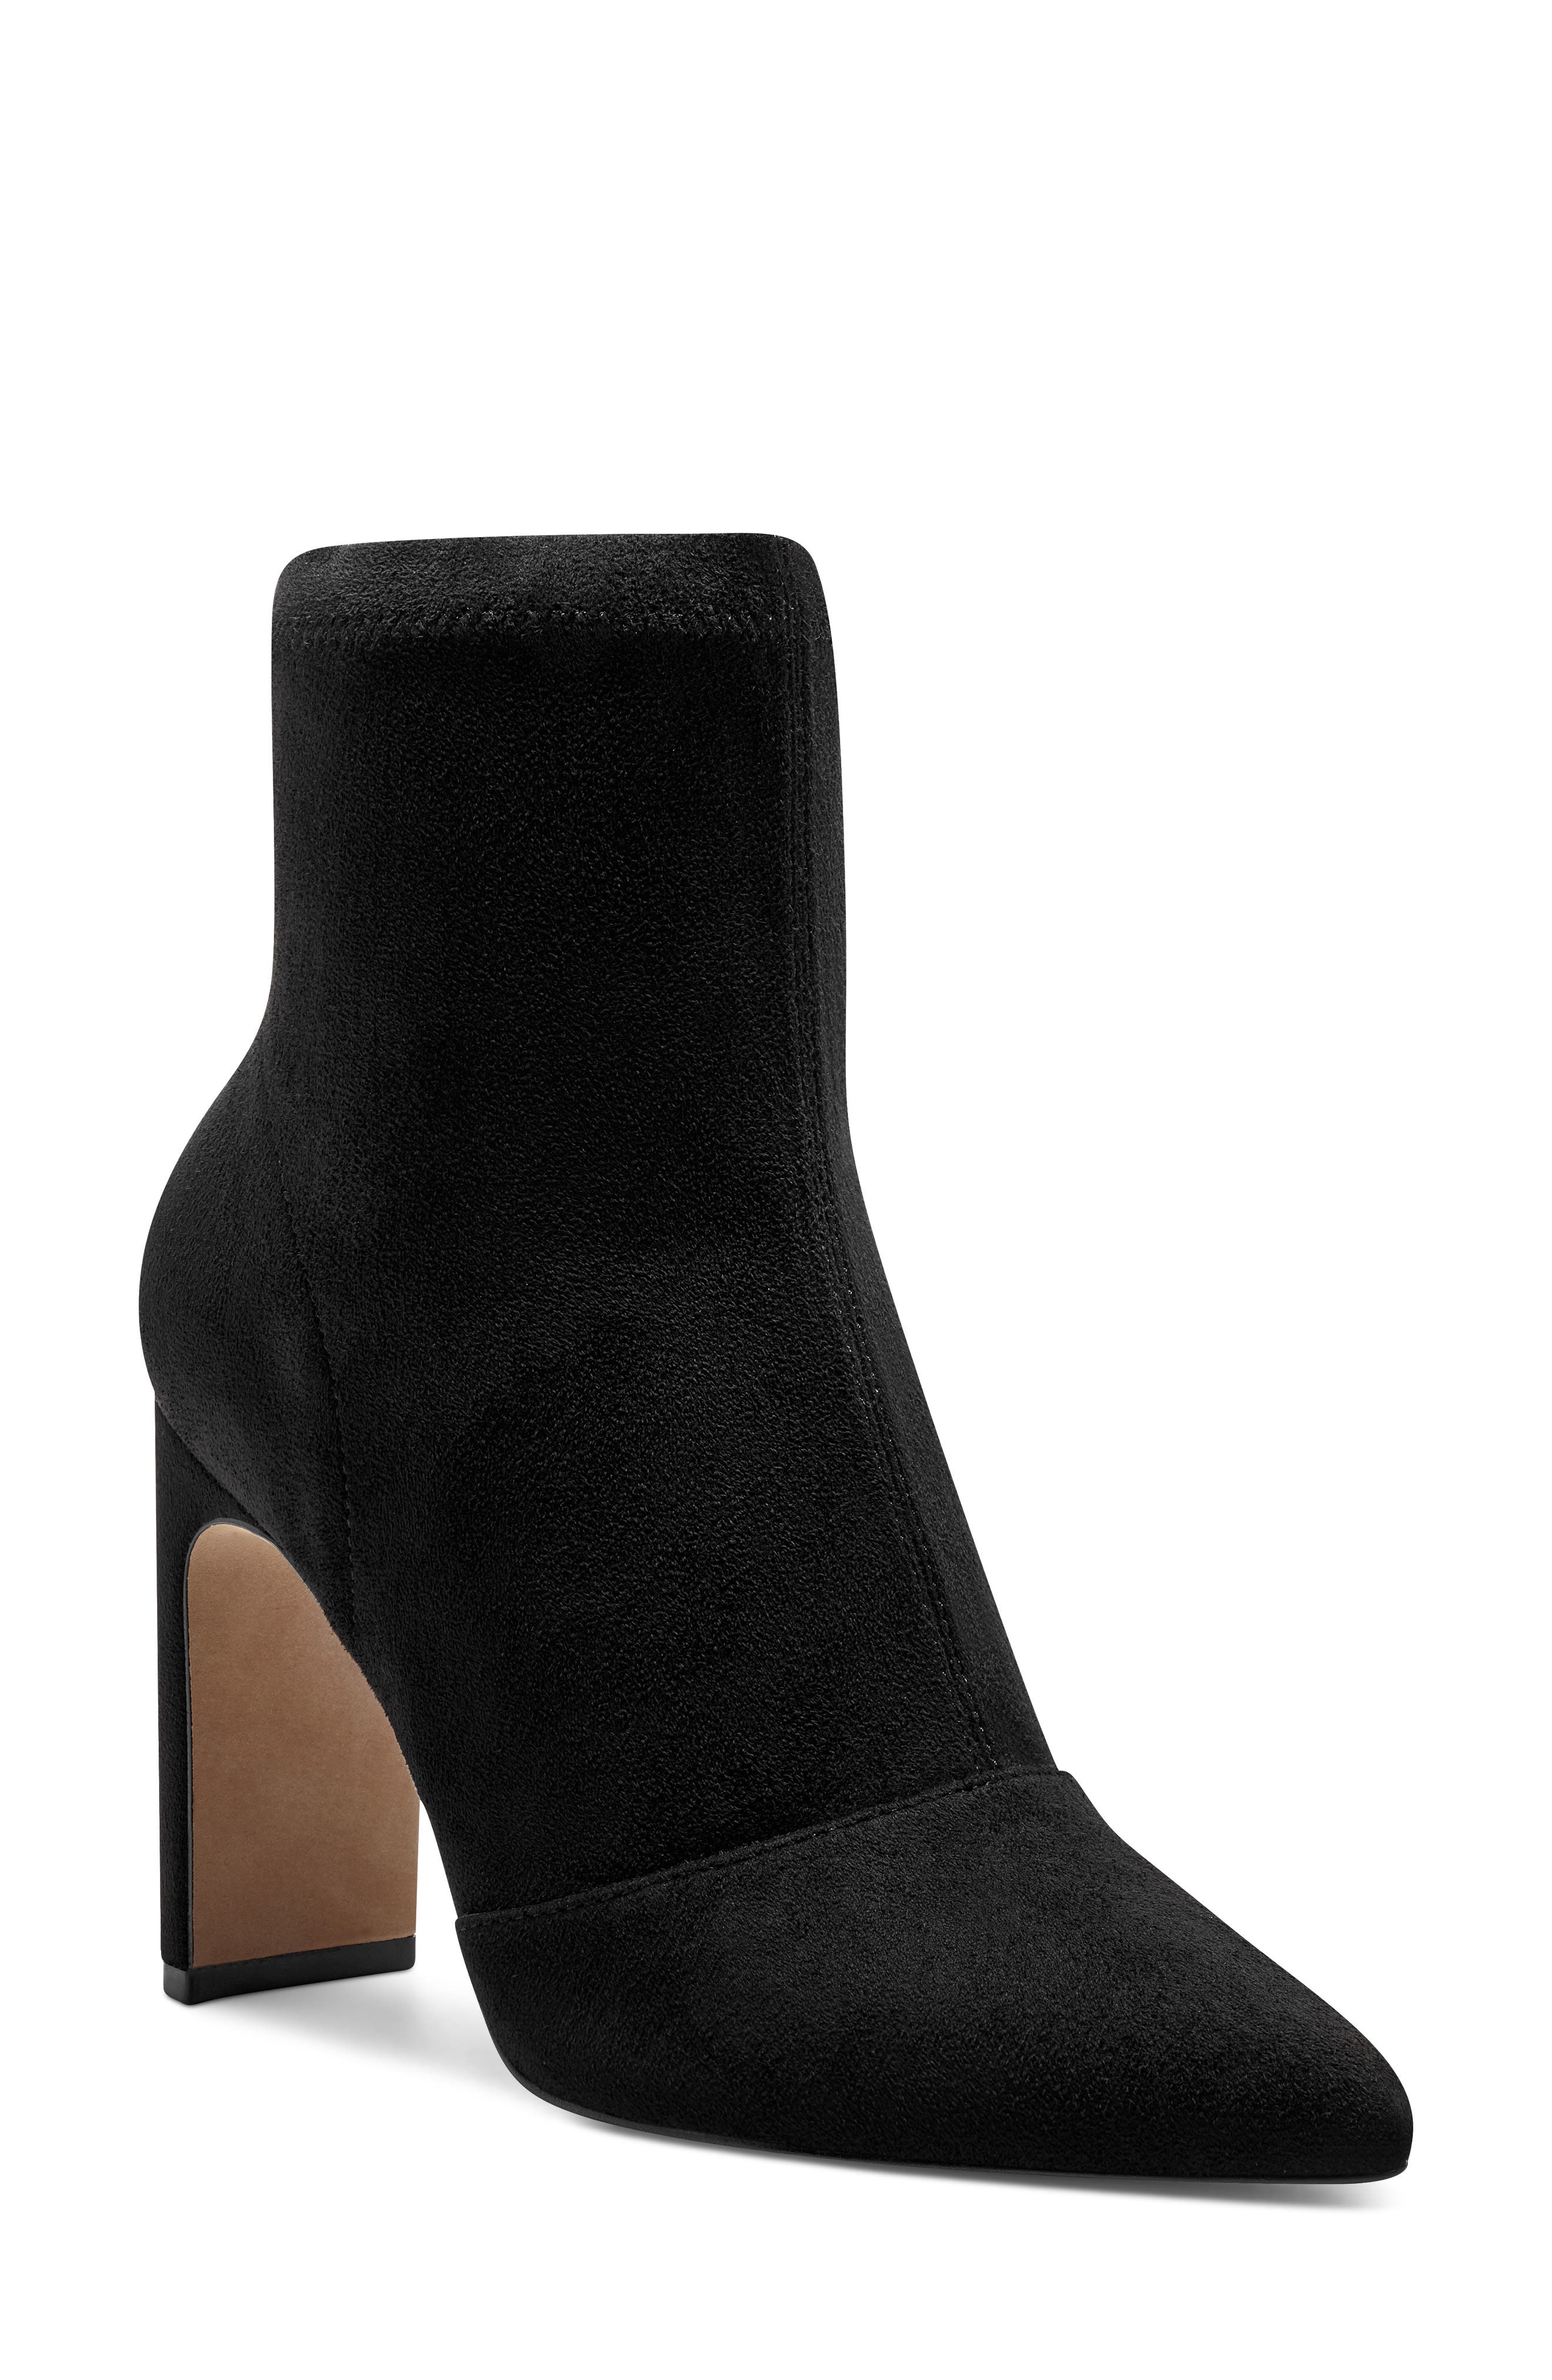 jessica simpson black ankle boots